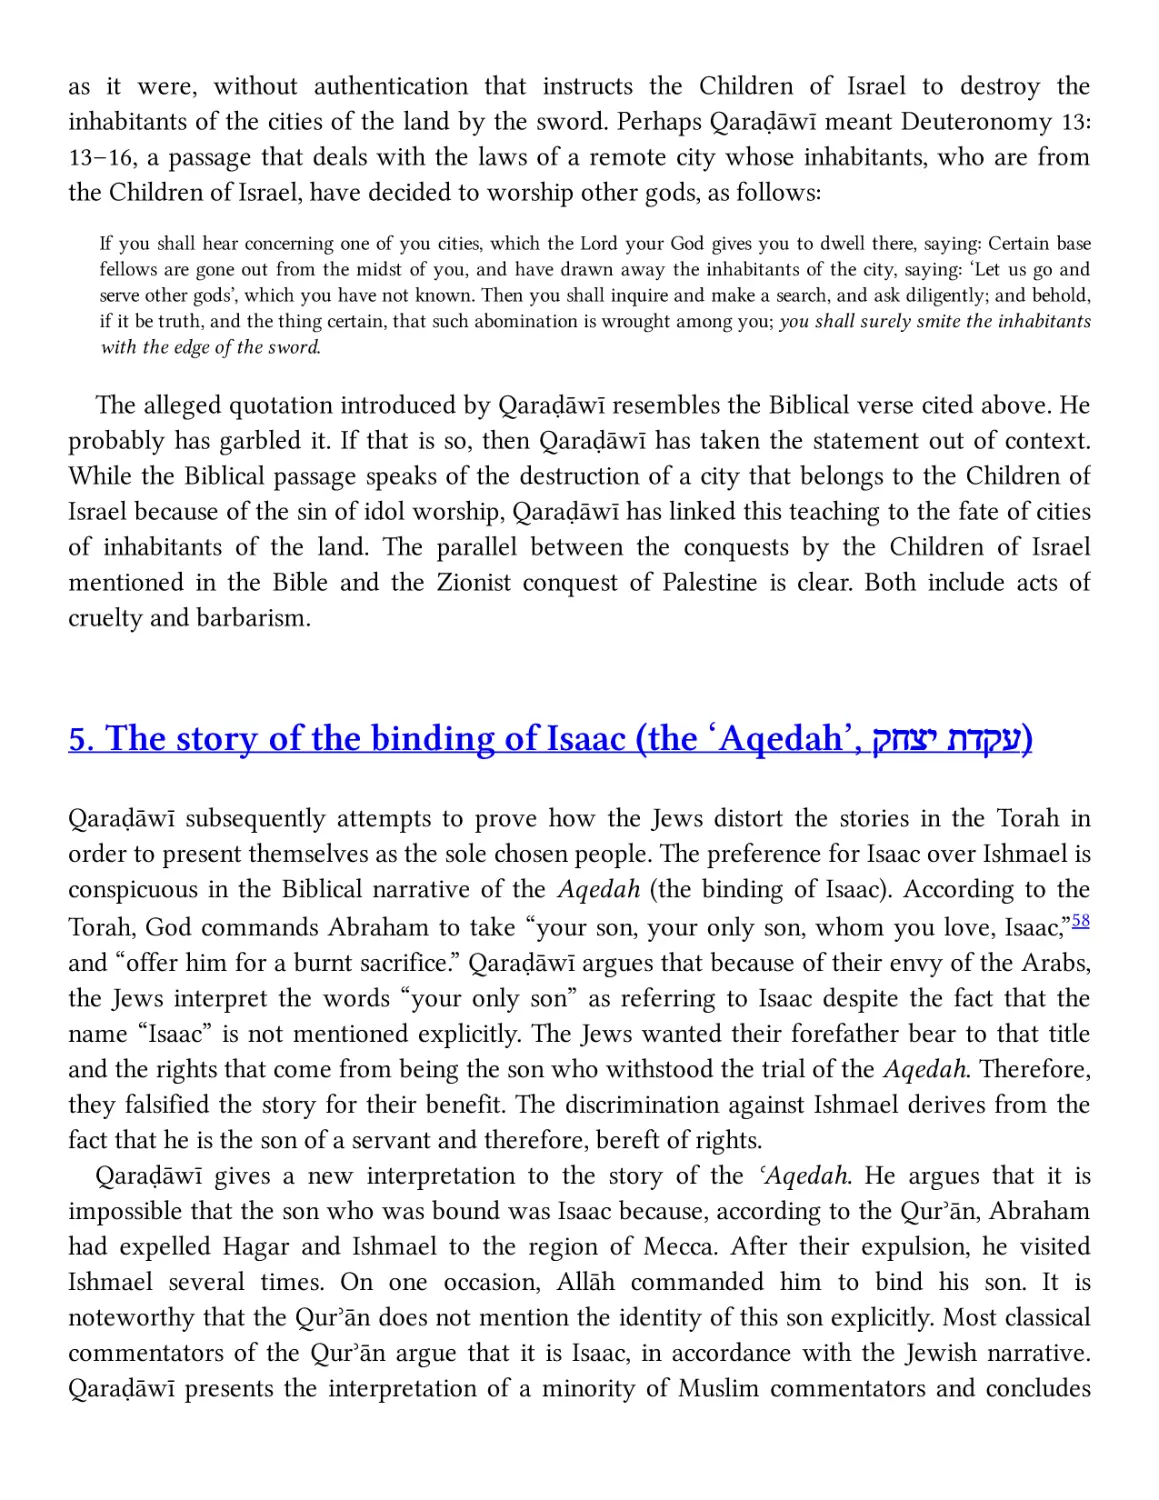 5. The story of the binding of Isaac (the ‘Aqedah’, עקדת יצחק)